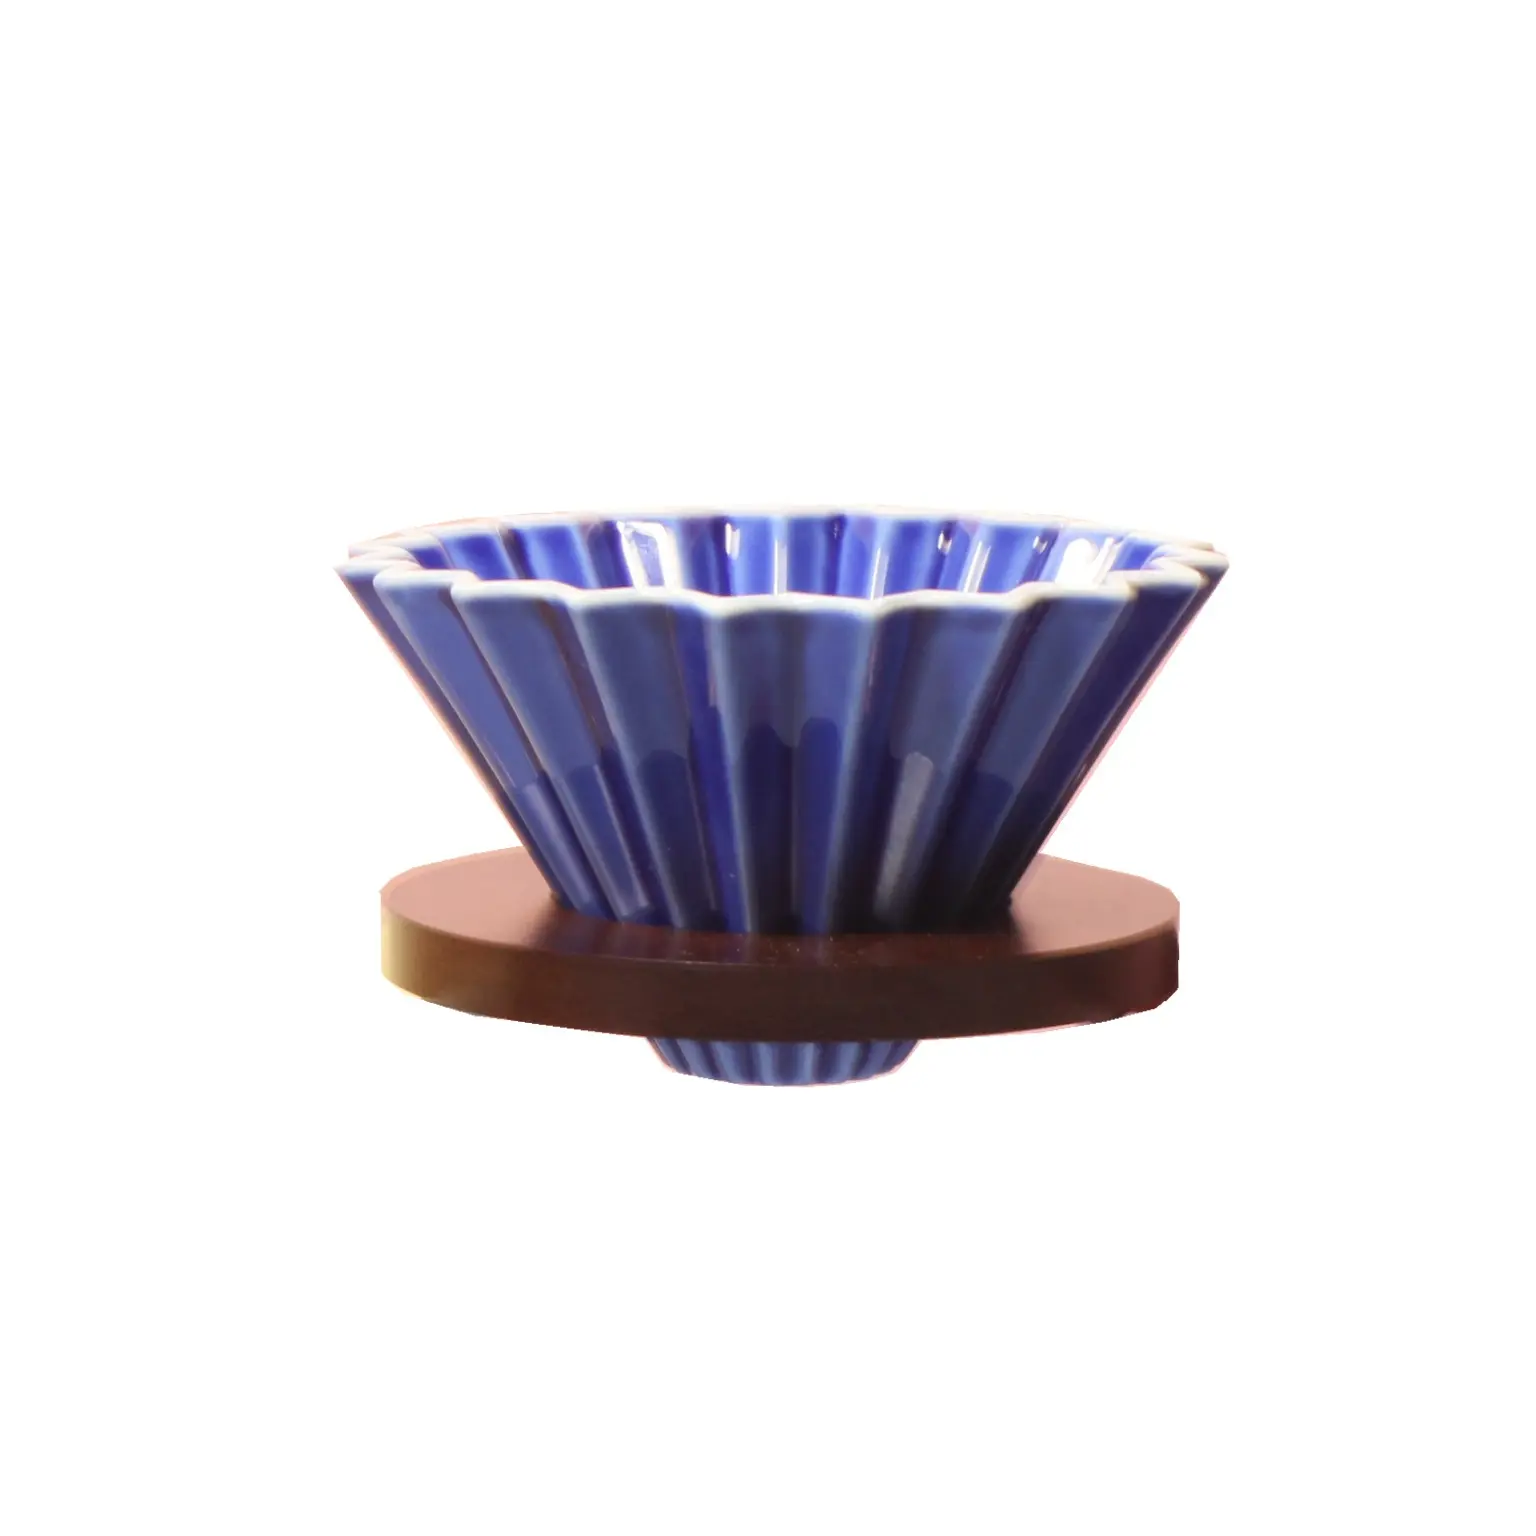 Filtro de café de origami perforado a mano, soporte de cerámica, embudo de cerámica, taza plegable, taza de filtro de café